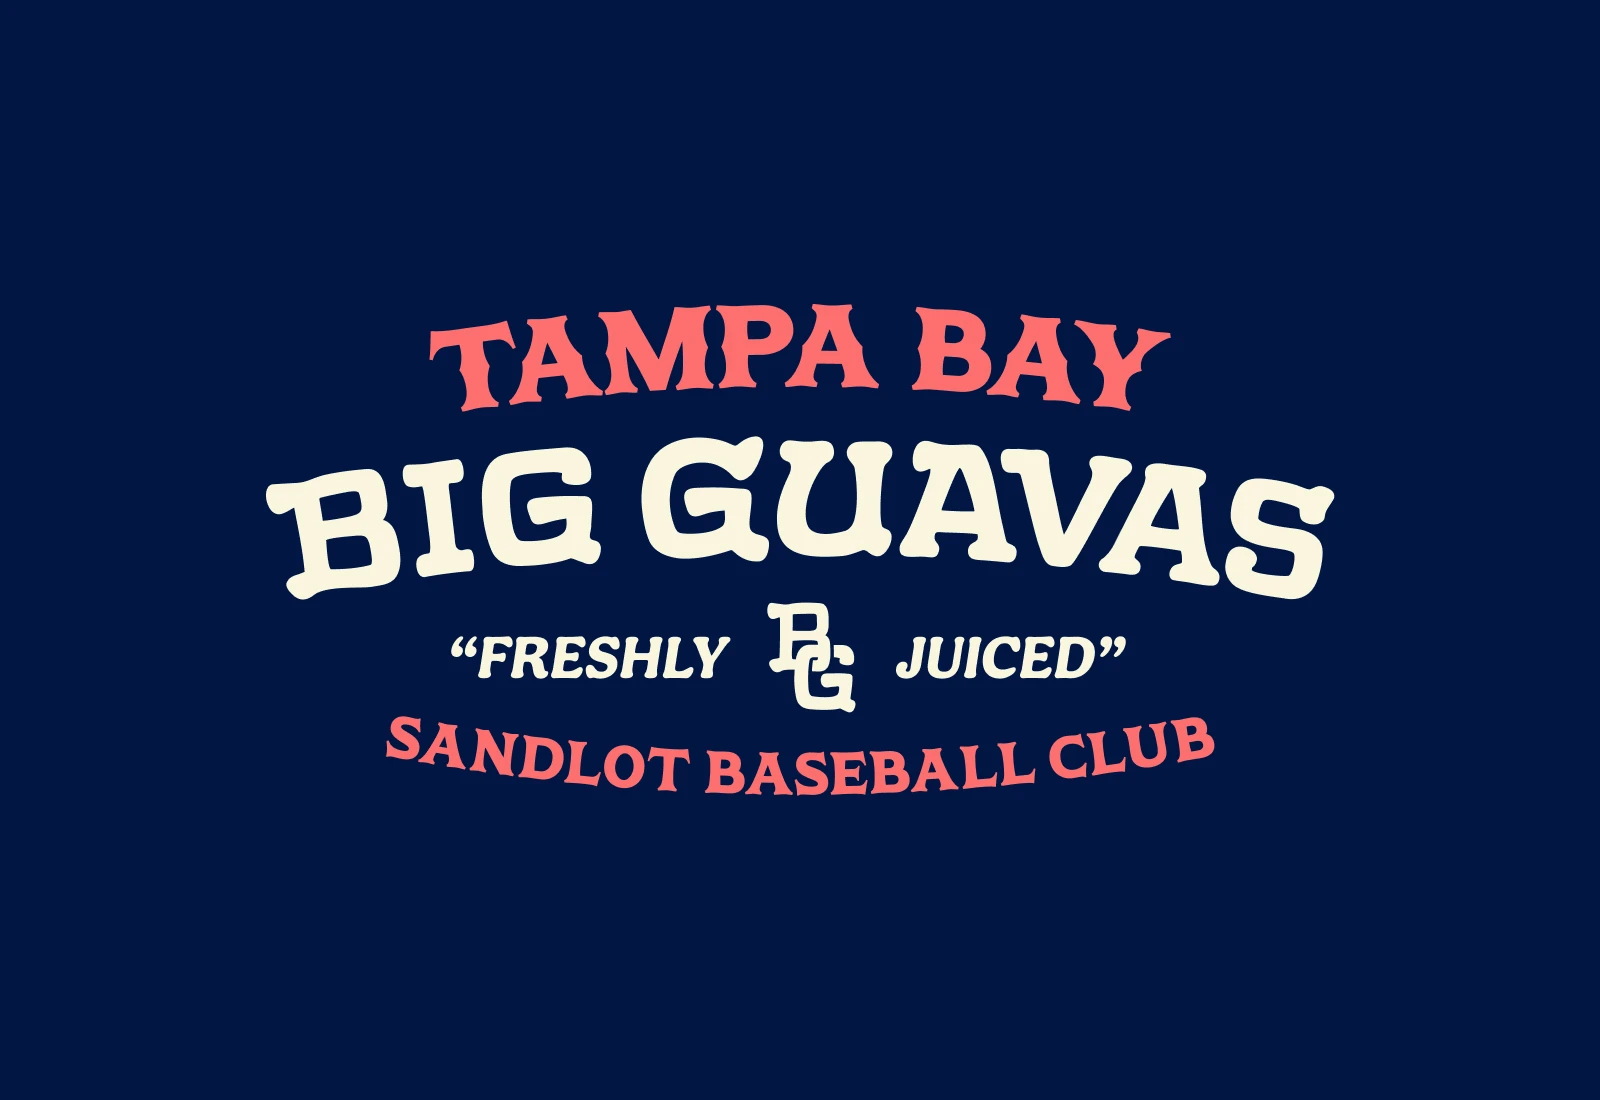 Full type lockup for the Tampa Bay Big Guavas Sandlot Baseball Club